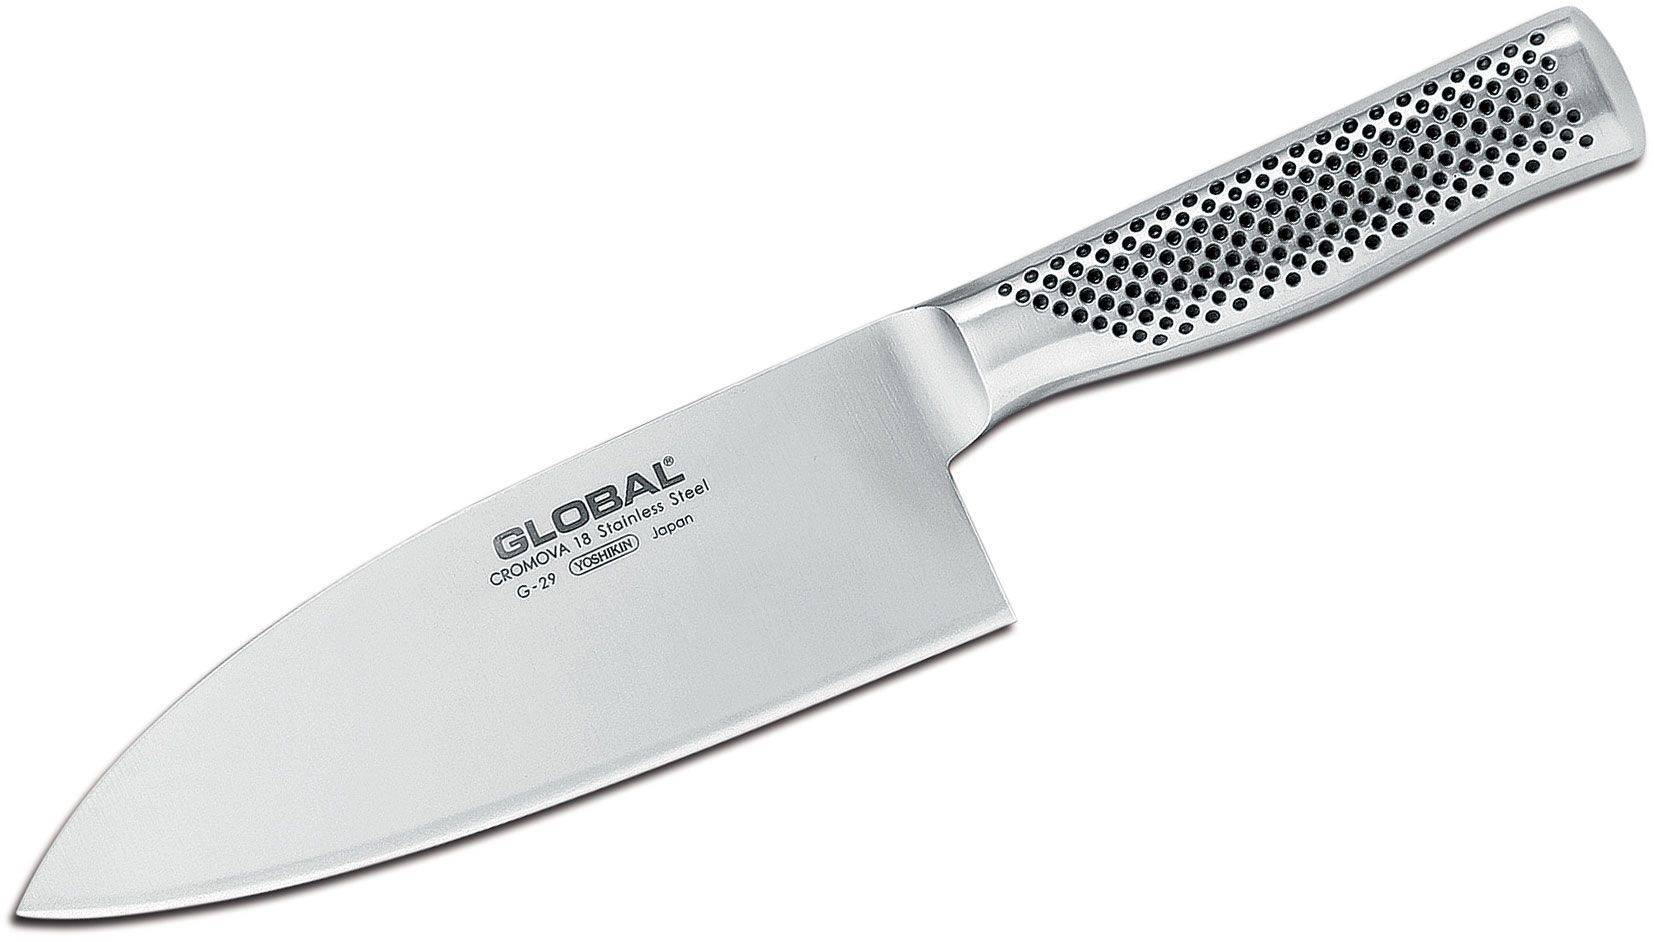 Global G-2 8 inch Chef's Knife